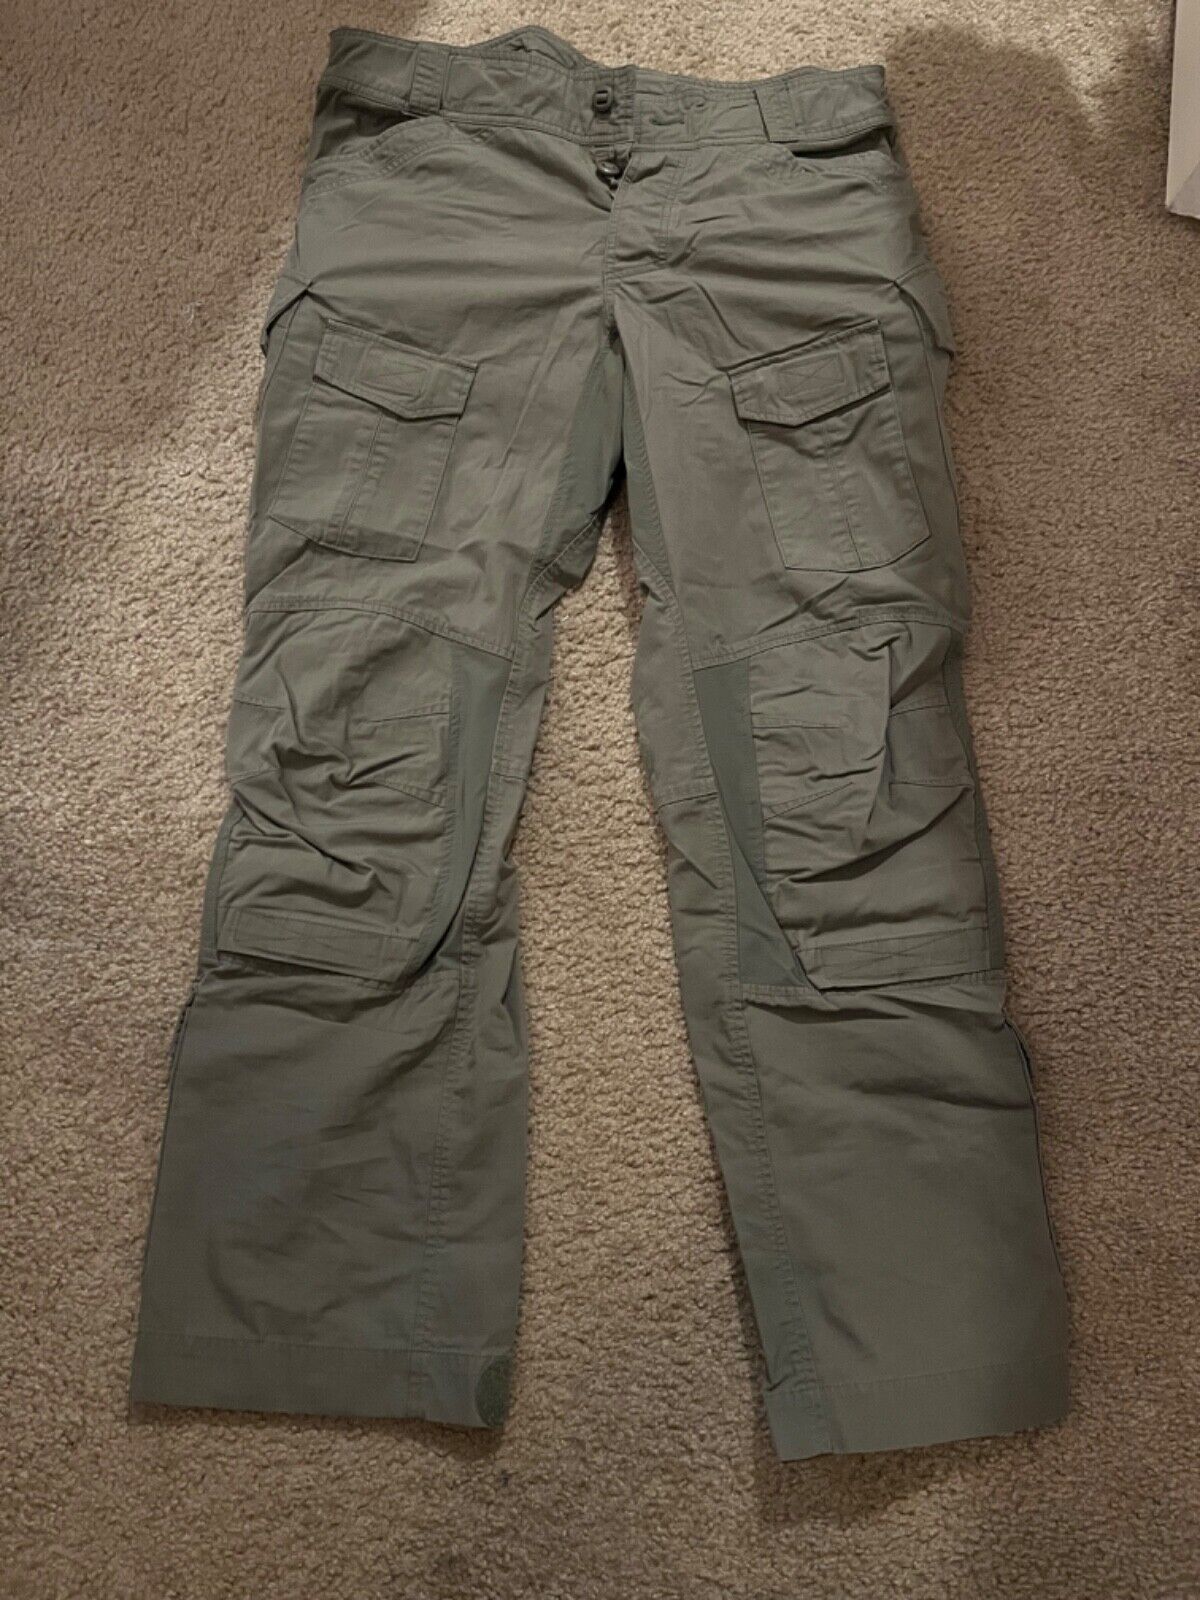 Beyond Clothing A9-T Mission Pants Ranger Green- Large Regular NWOT